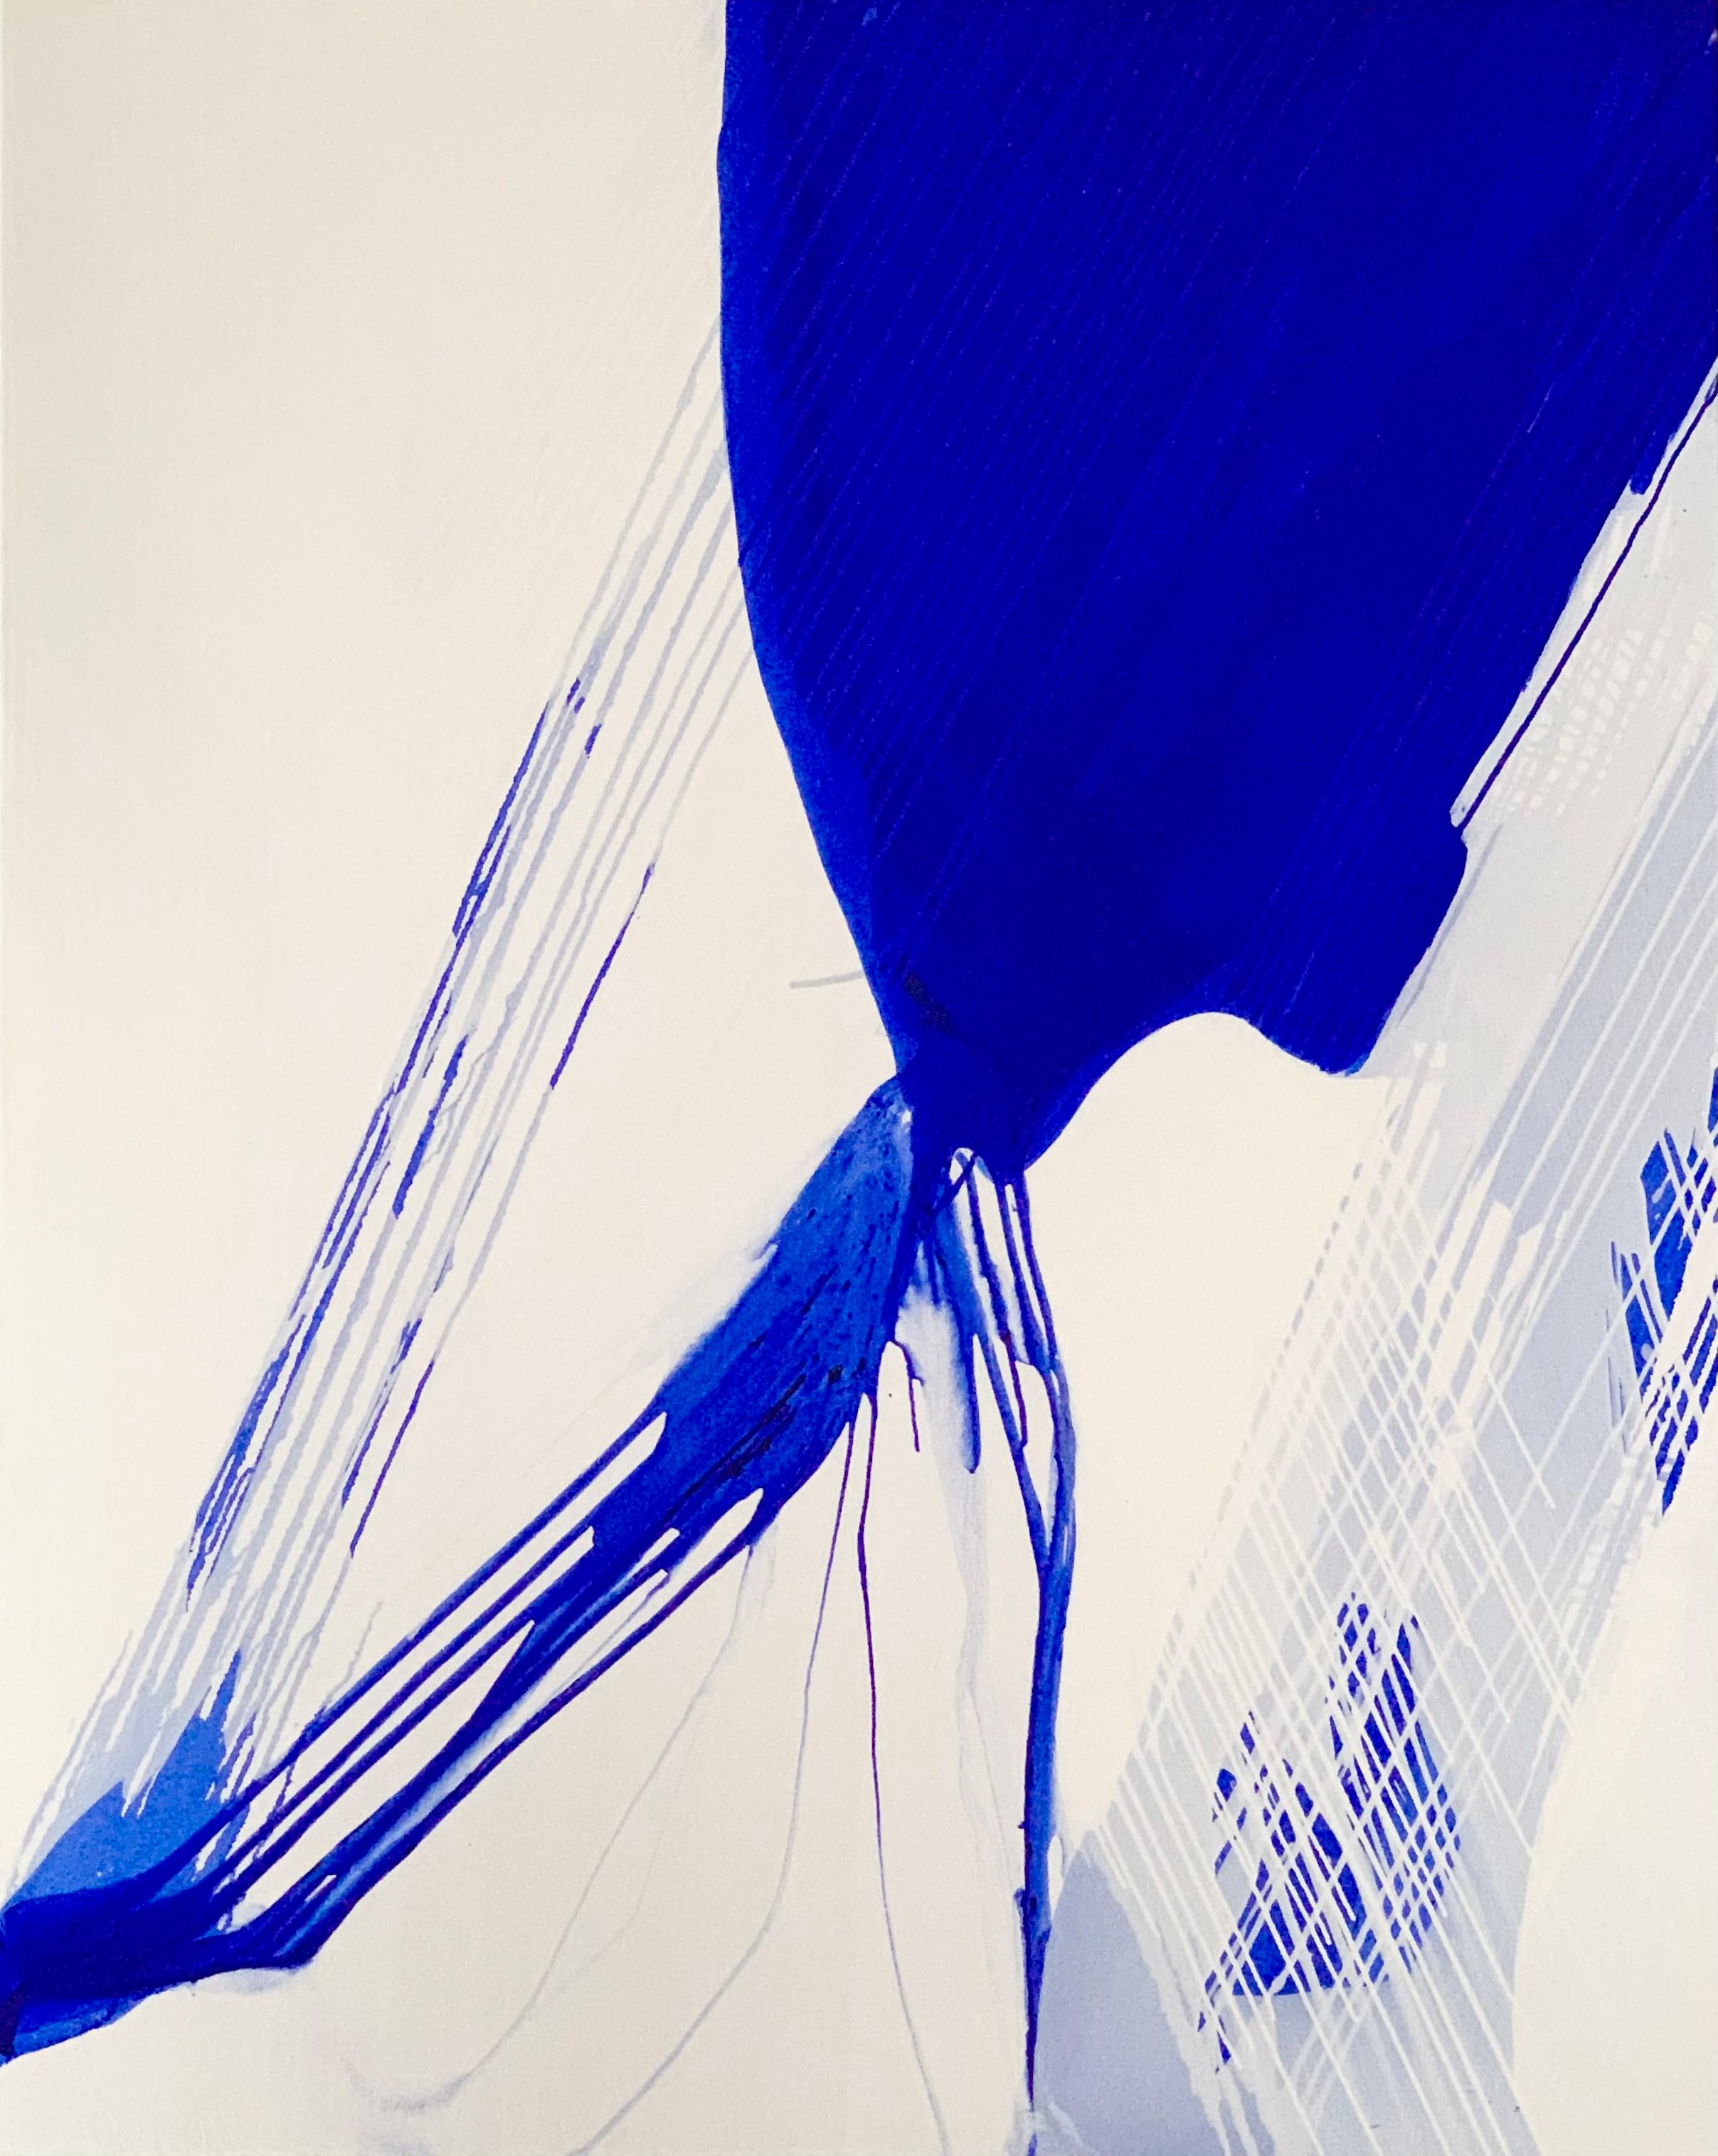 Abstract Painting Urszula Wilk - Série Bluemetrie moderne bleu-blanc  Peinture à l'huile abstraite, art conceptuel XL 